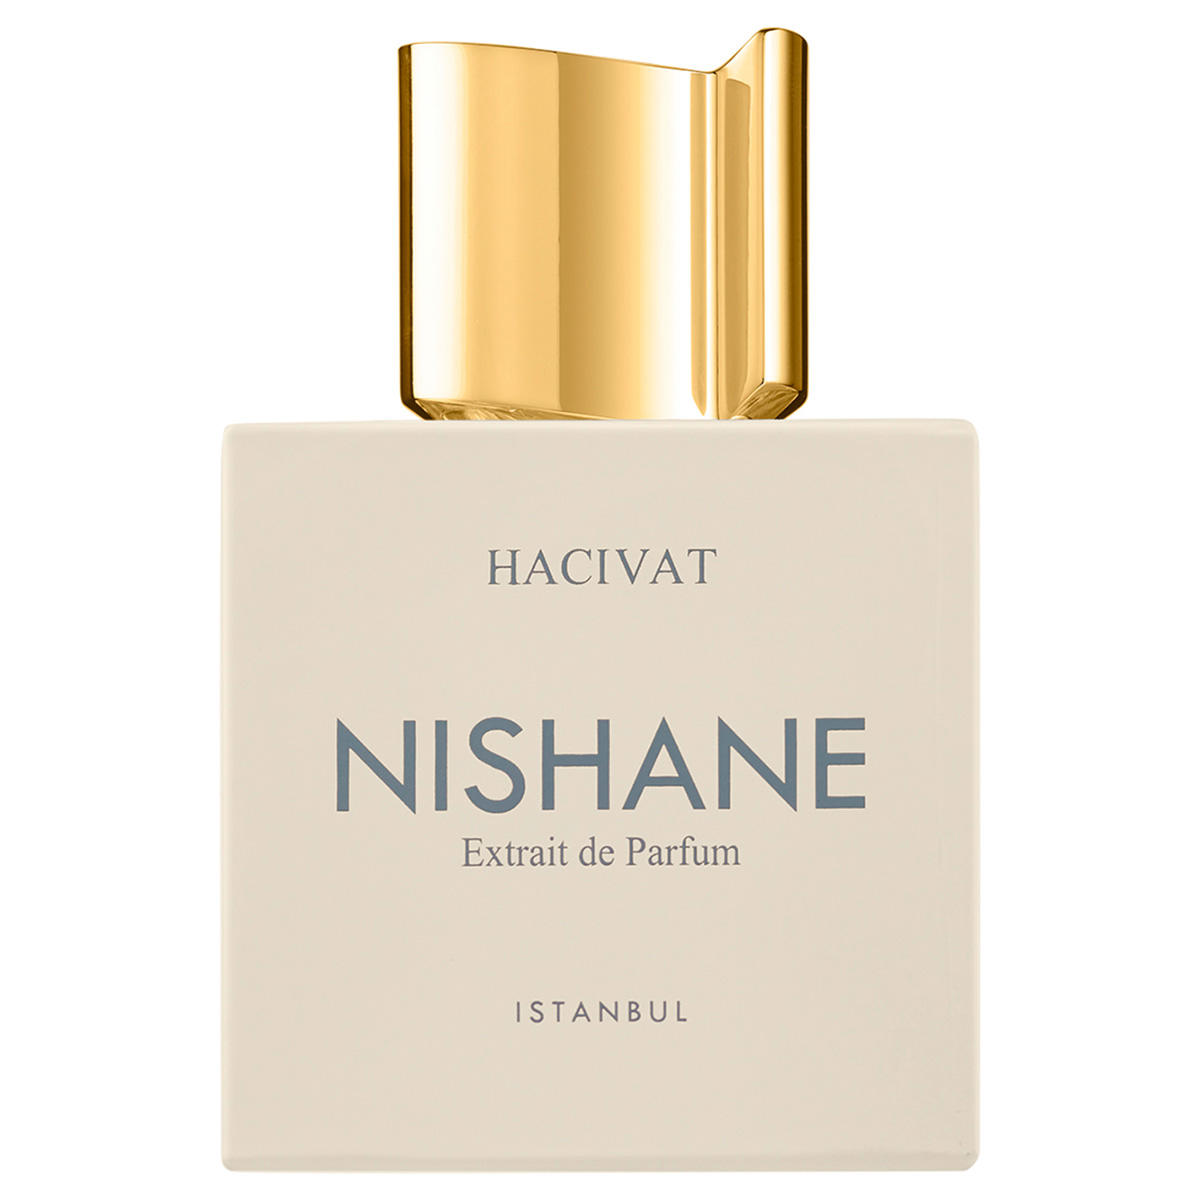 NISHANE Hacivat Extrait de Parfum  - 1